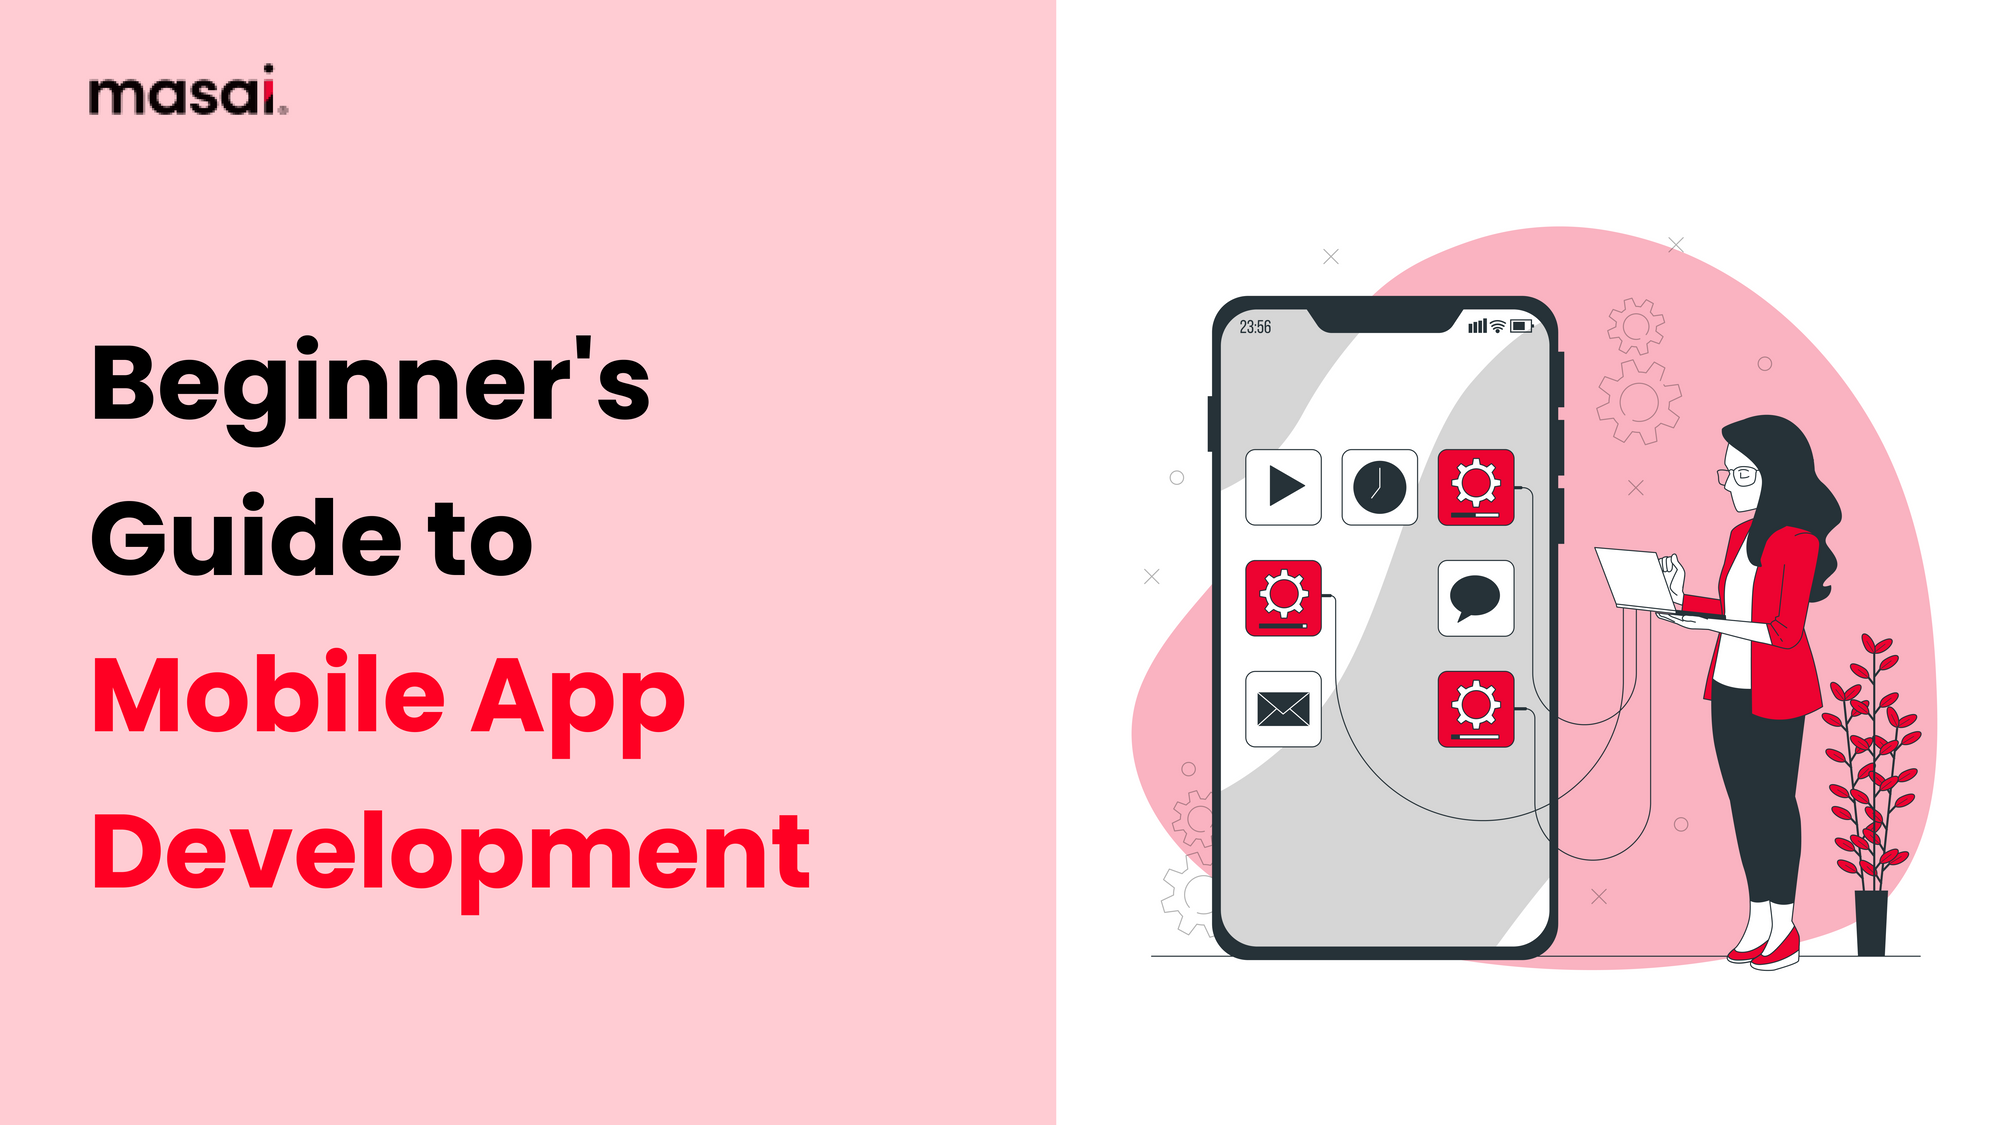 A Beginner’s Guide to Mobile App Development in 8 Steps